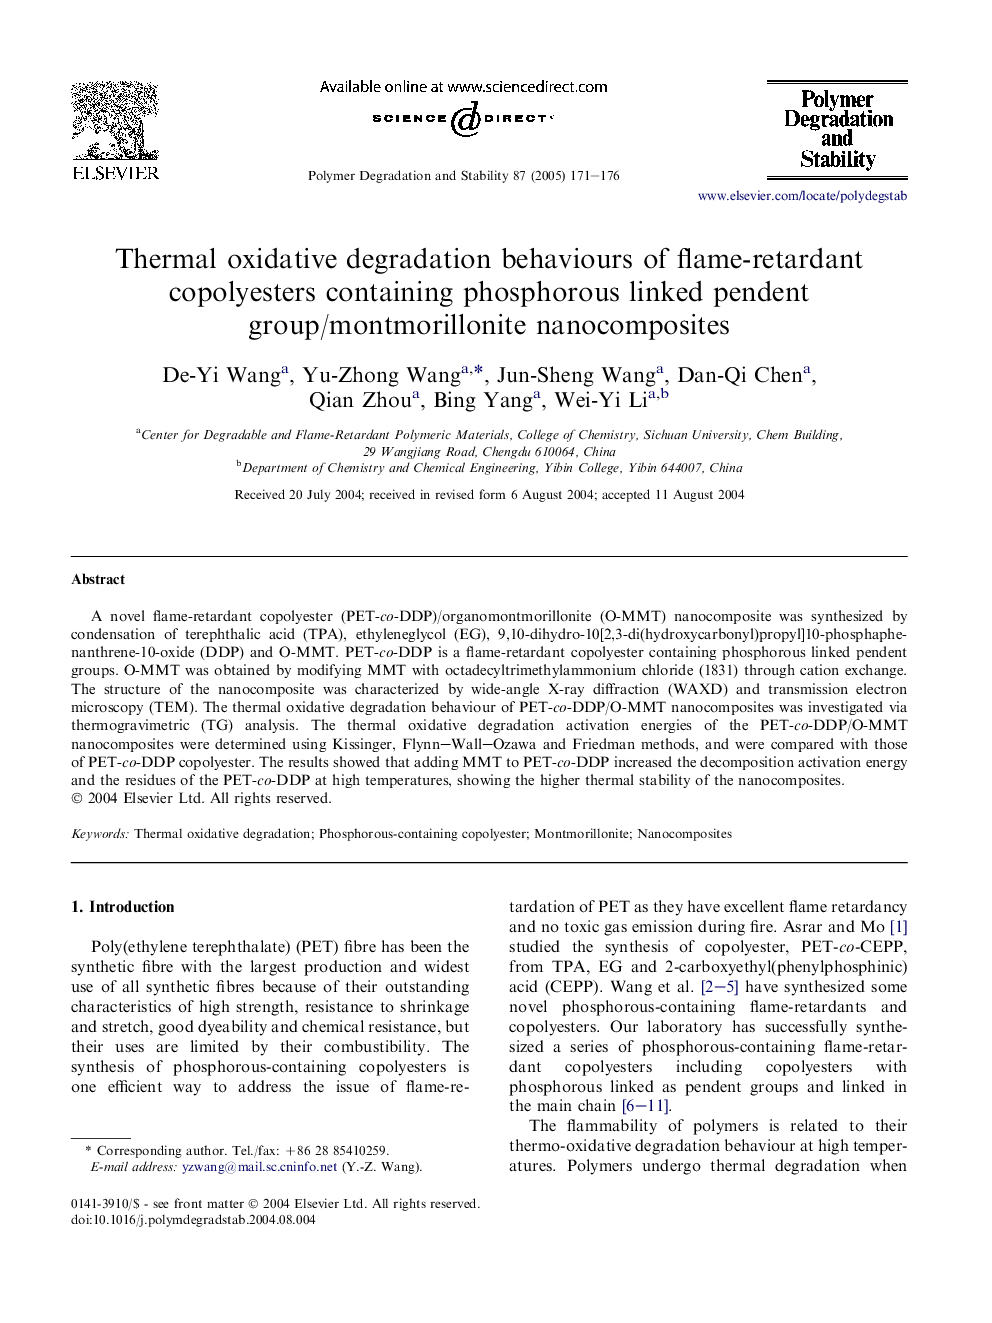 Thermal oxidative degradation behaviours of flame-retardant copolyesters containing phosphorous linked pendent group/montmorillonite nanocomposites